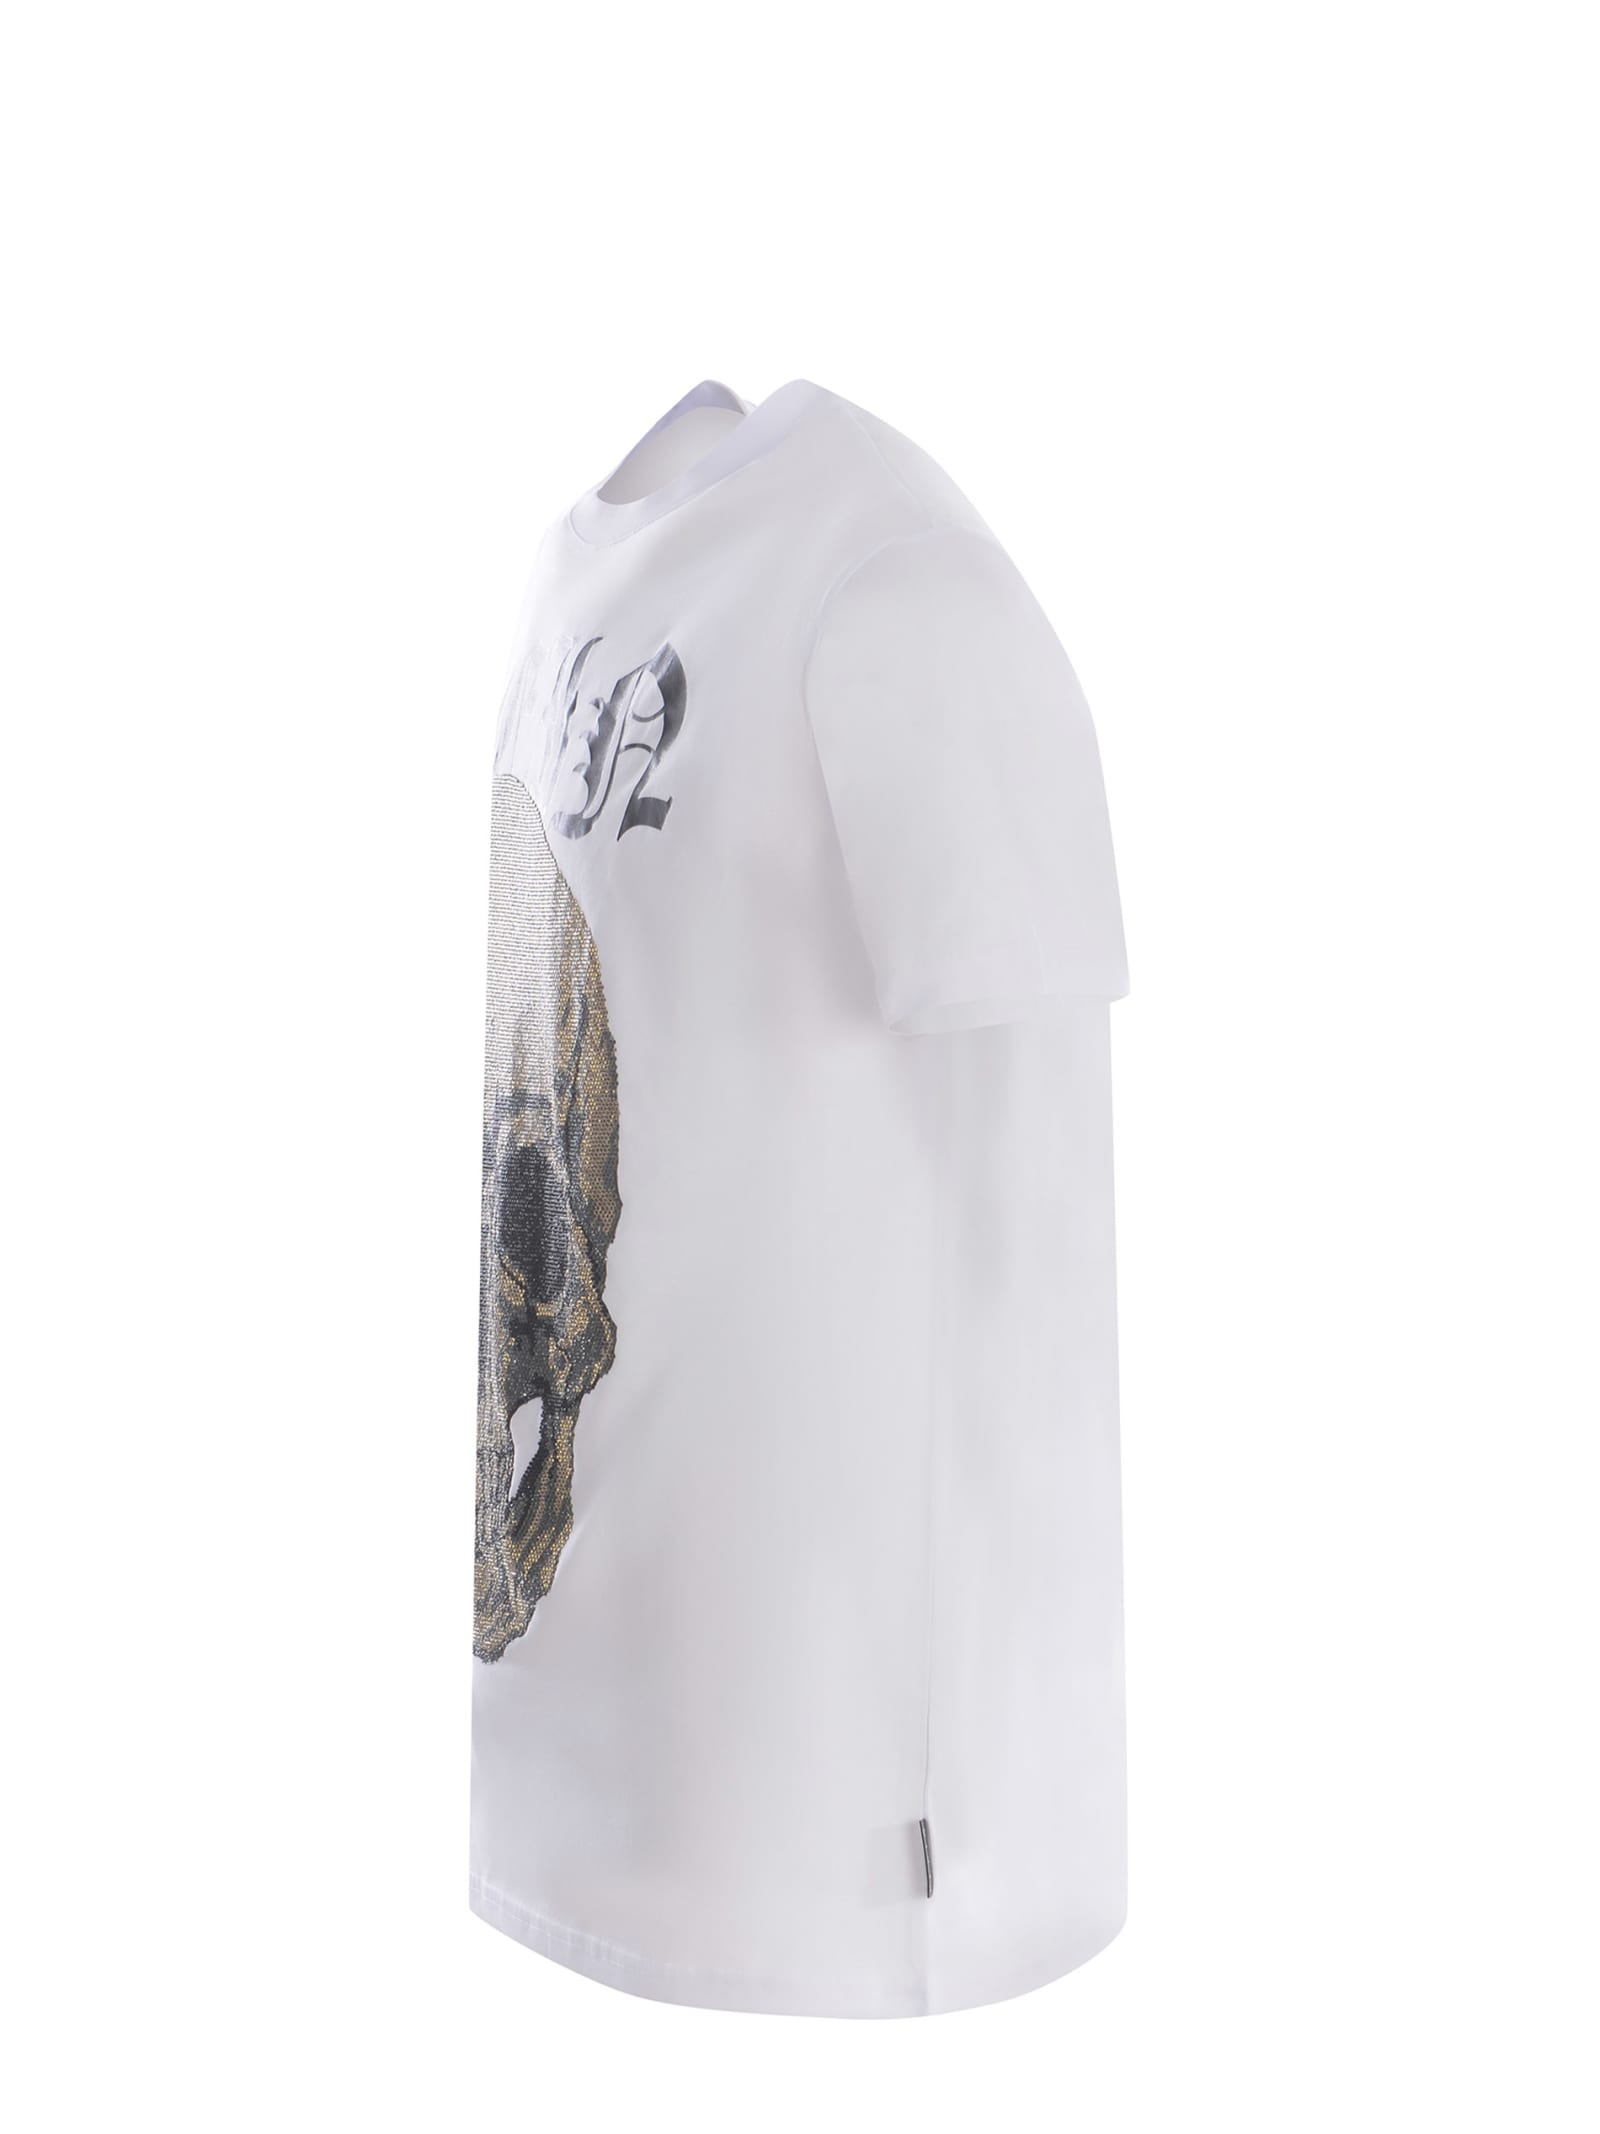 Shop Philipp Plein T-shirt  Made Of Cotton Jersey In Bianco